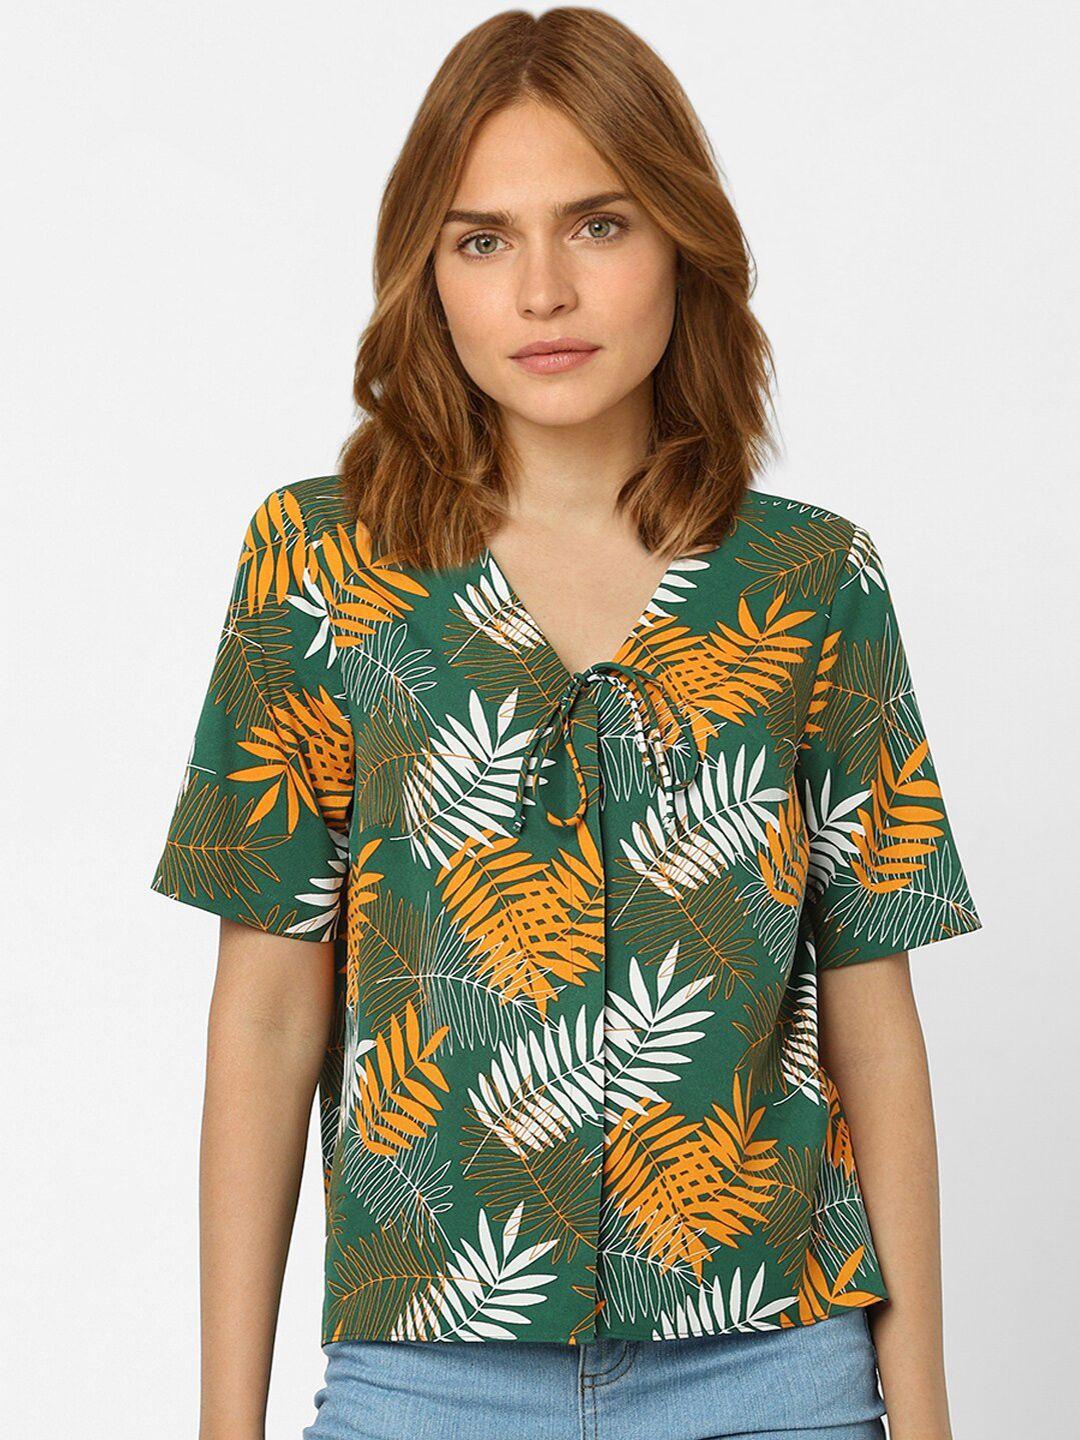 vero moda green & orange tropical print tie-up neck tropical shirt style top